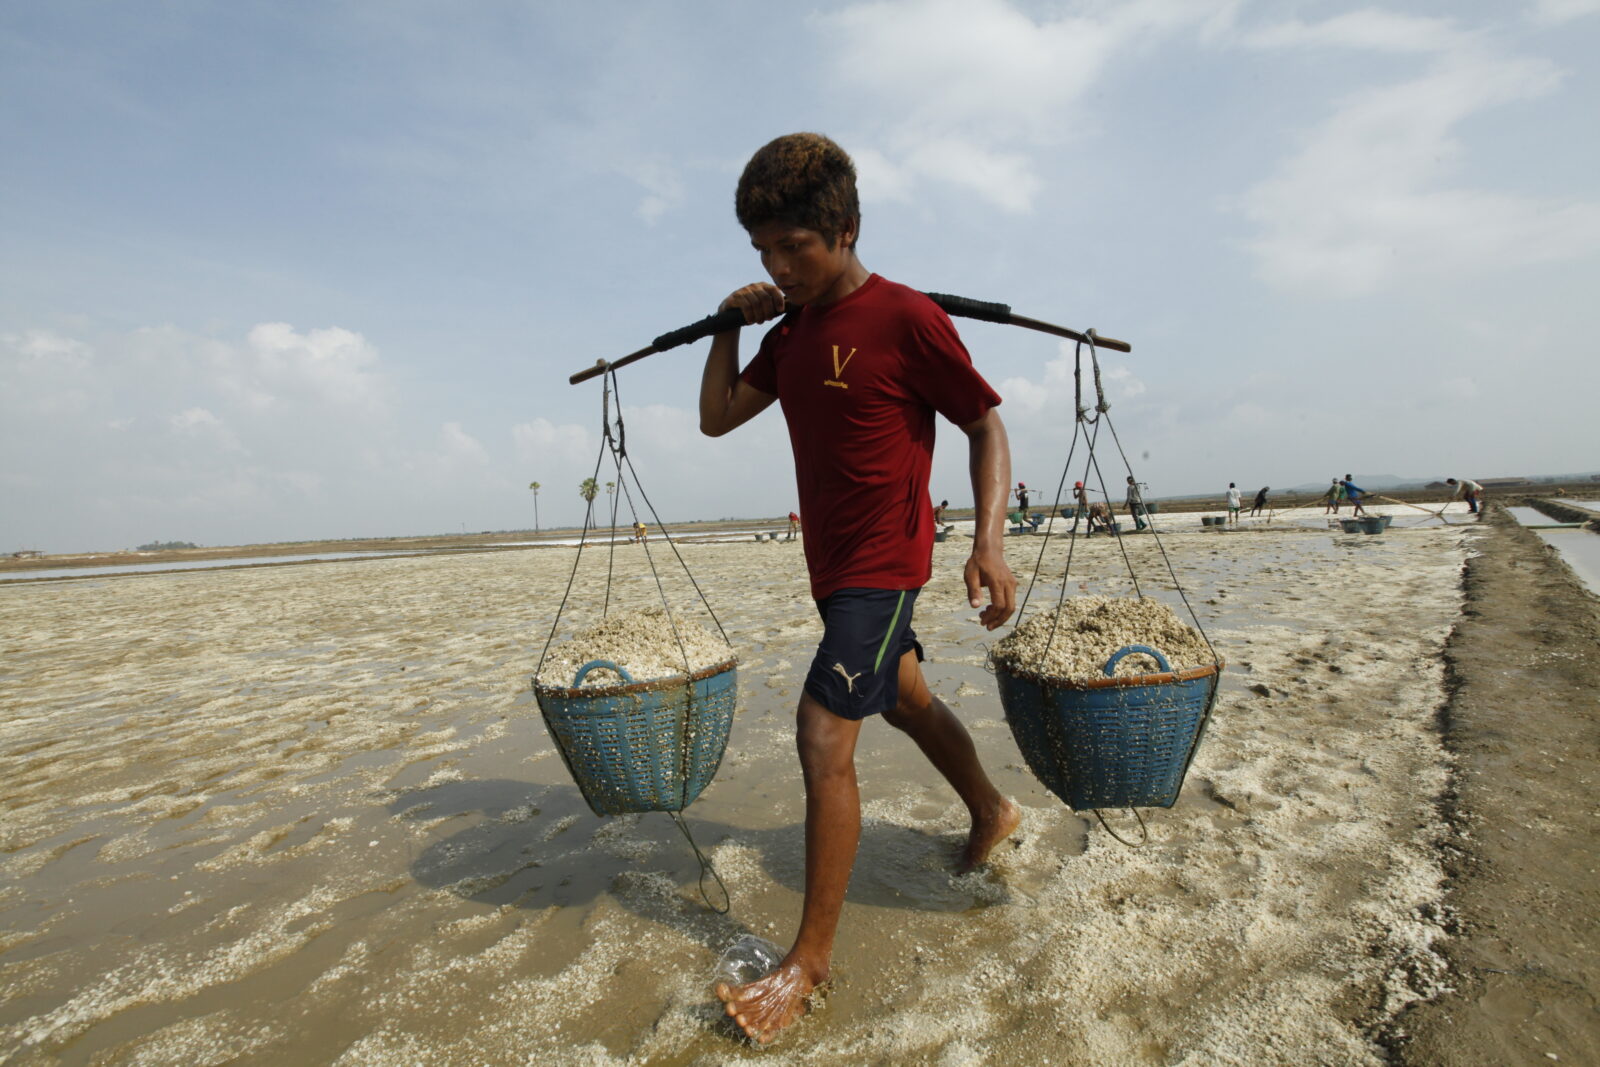 A Burmese salt worker carrying a heavy salt basket from the salt field near the beach of Mon state, Thaphyuzayet township, Burma, on May 6, 2016. (Hong Sar)